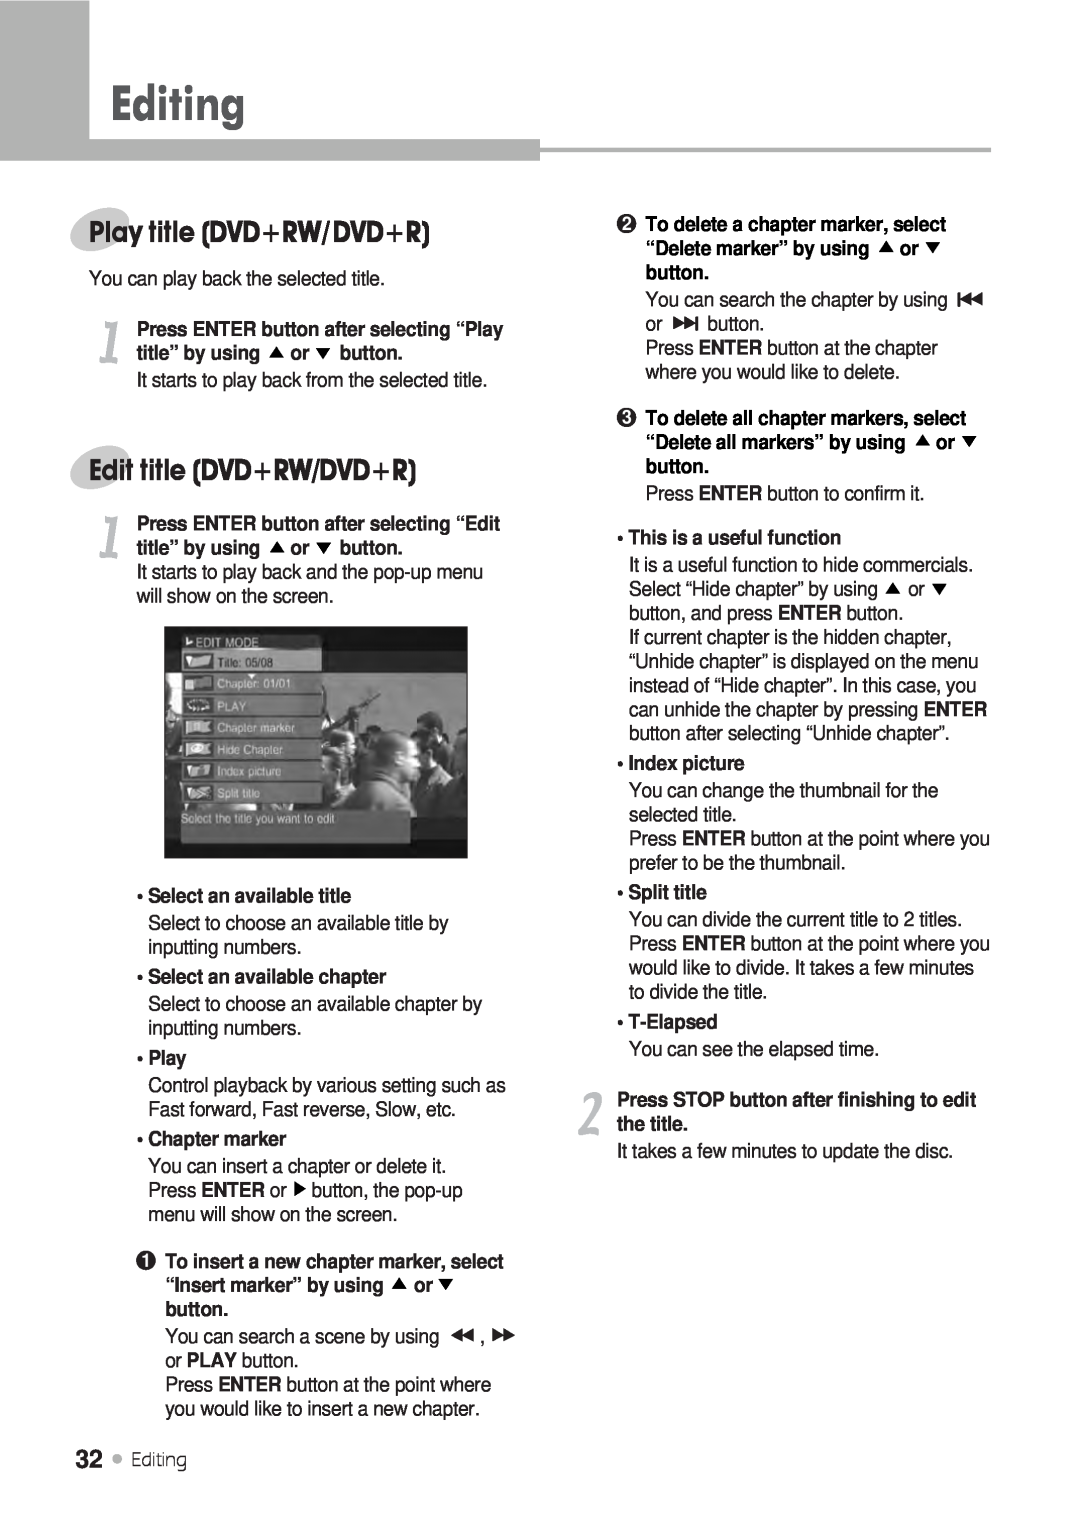 H & B DRX-430 manual Play title DVD+RW/DVD+R, Edit title DVD+RW/DVD+R, Editing, title” by using or button, Chapter marker 